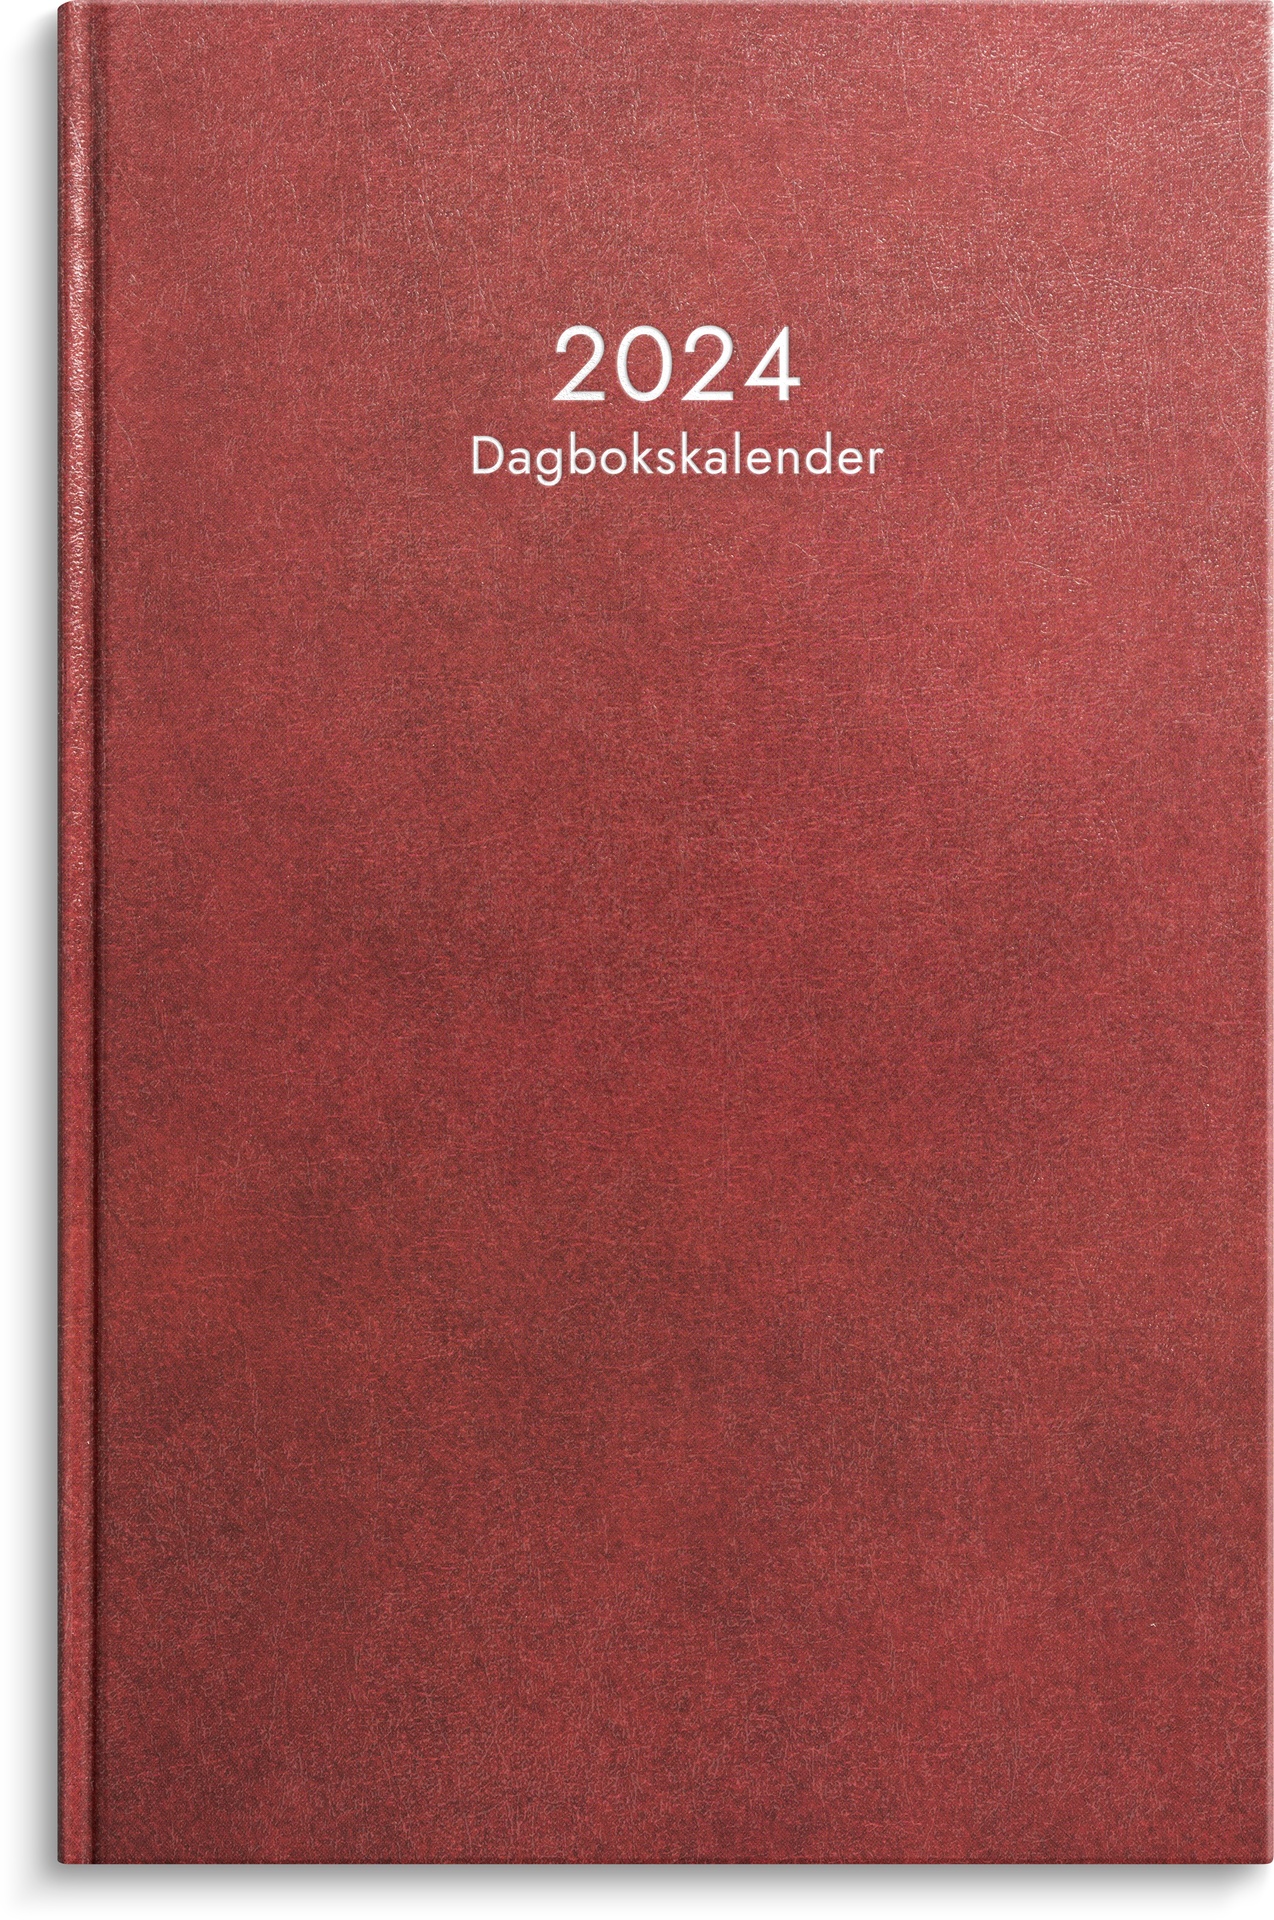 [61108724] Dagbokskalender röd 2024